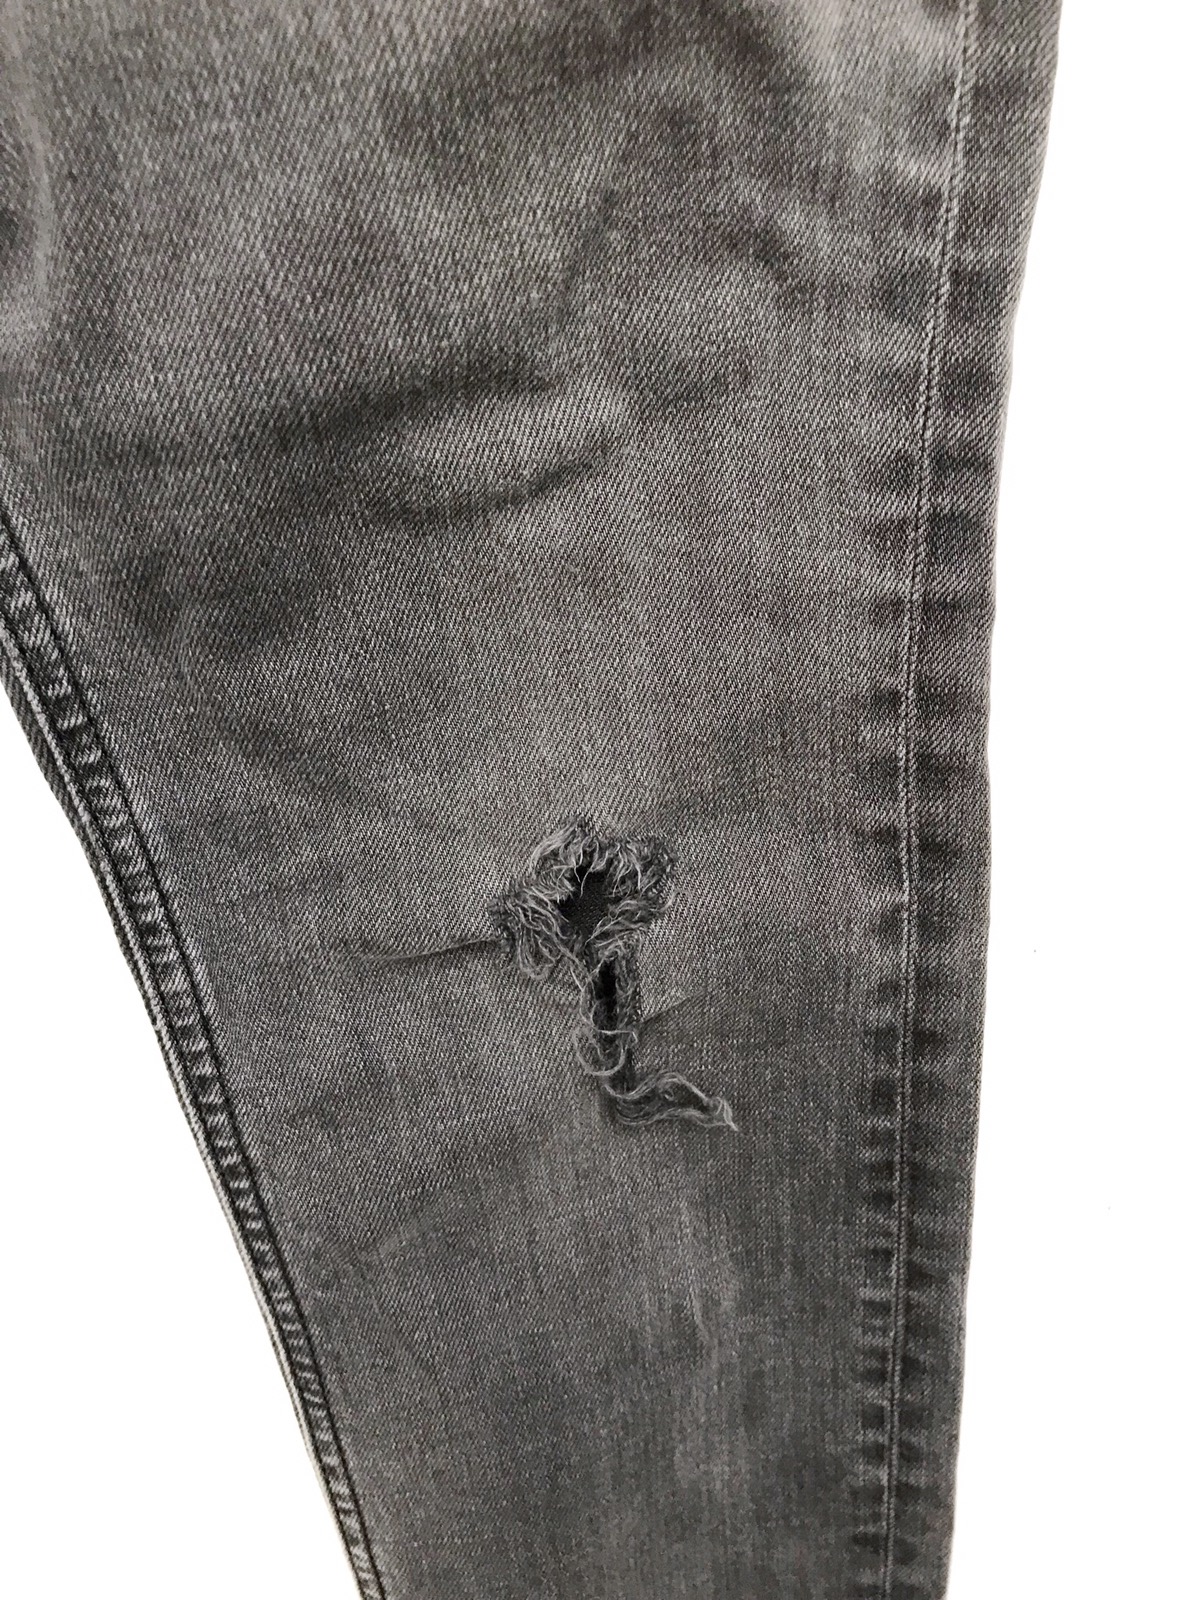 Acne Studios Distressed Skinny Jeans - 6